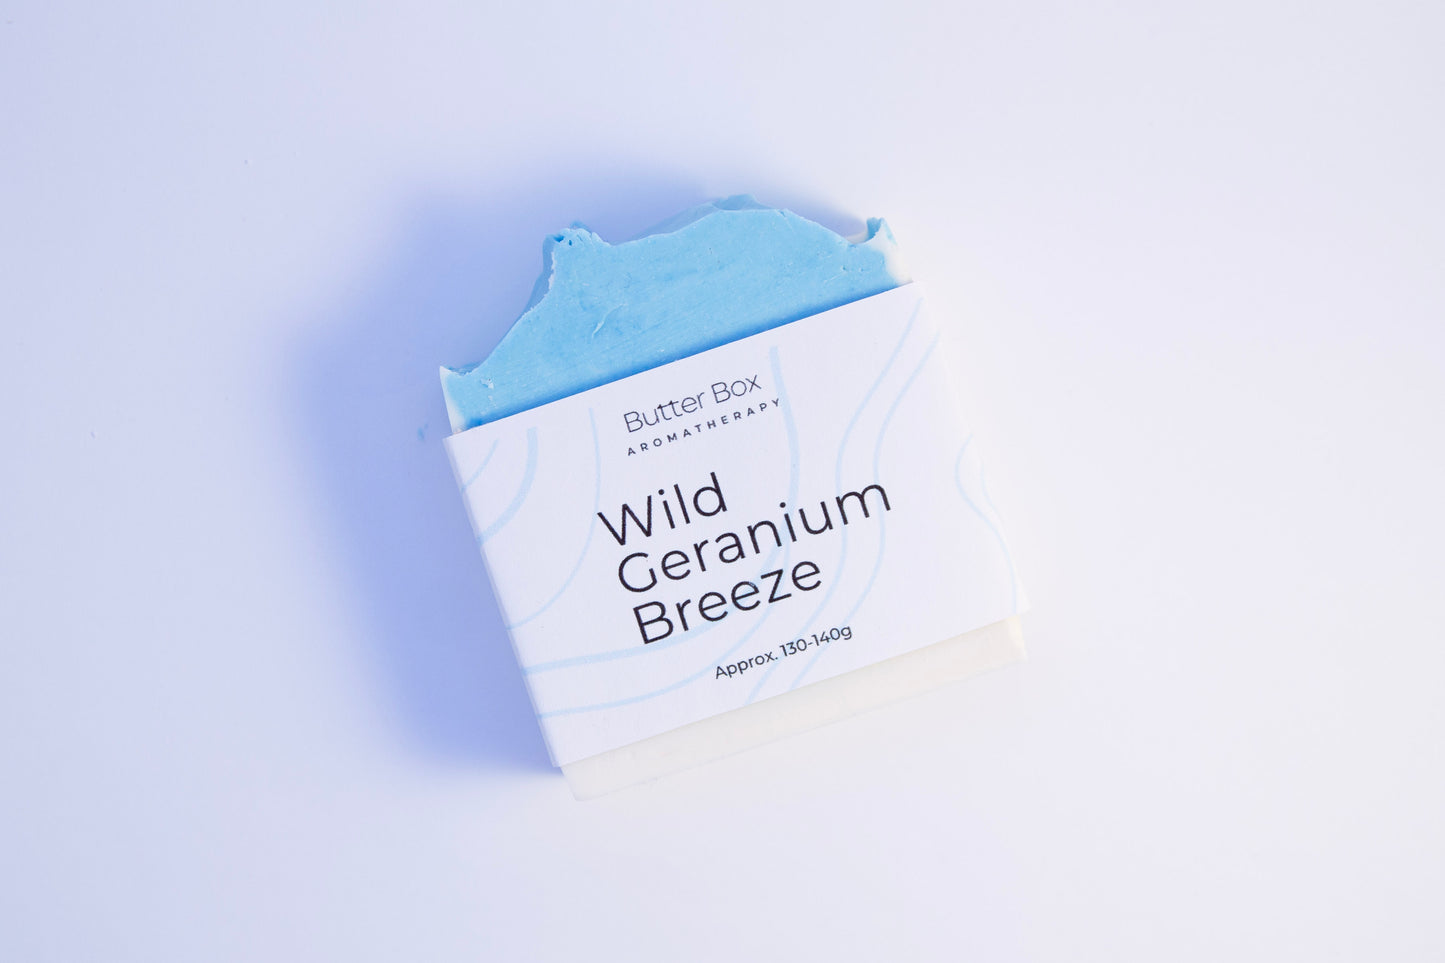 Wild Geranium Breeze Soap